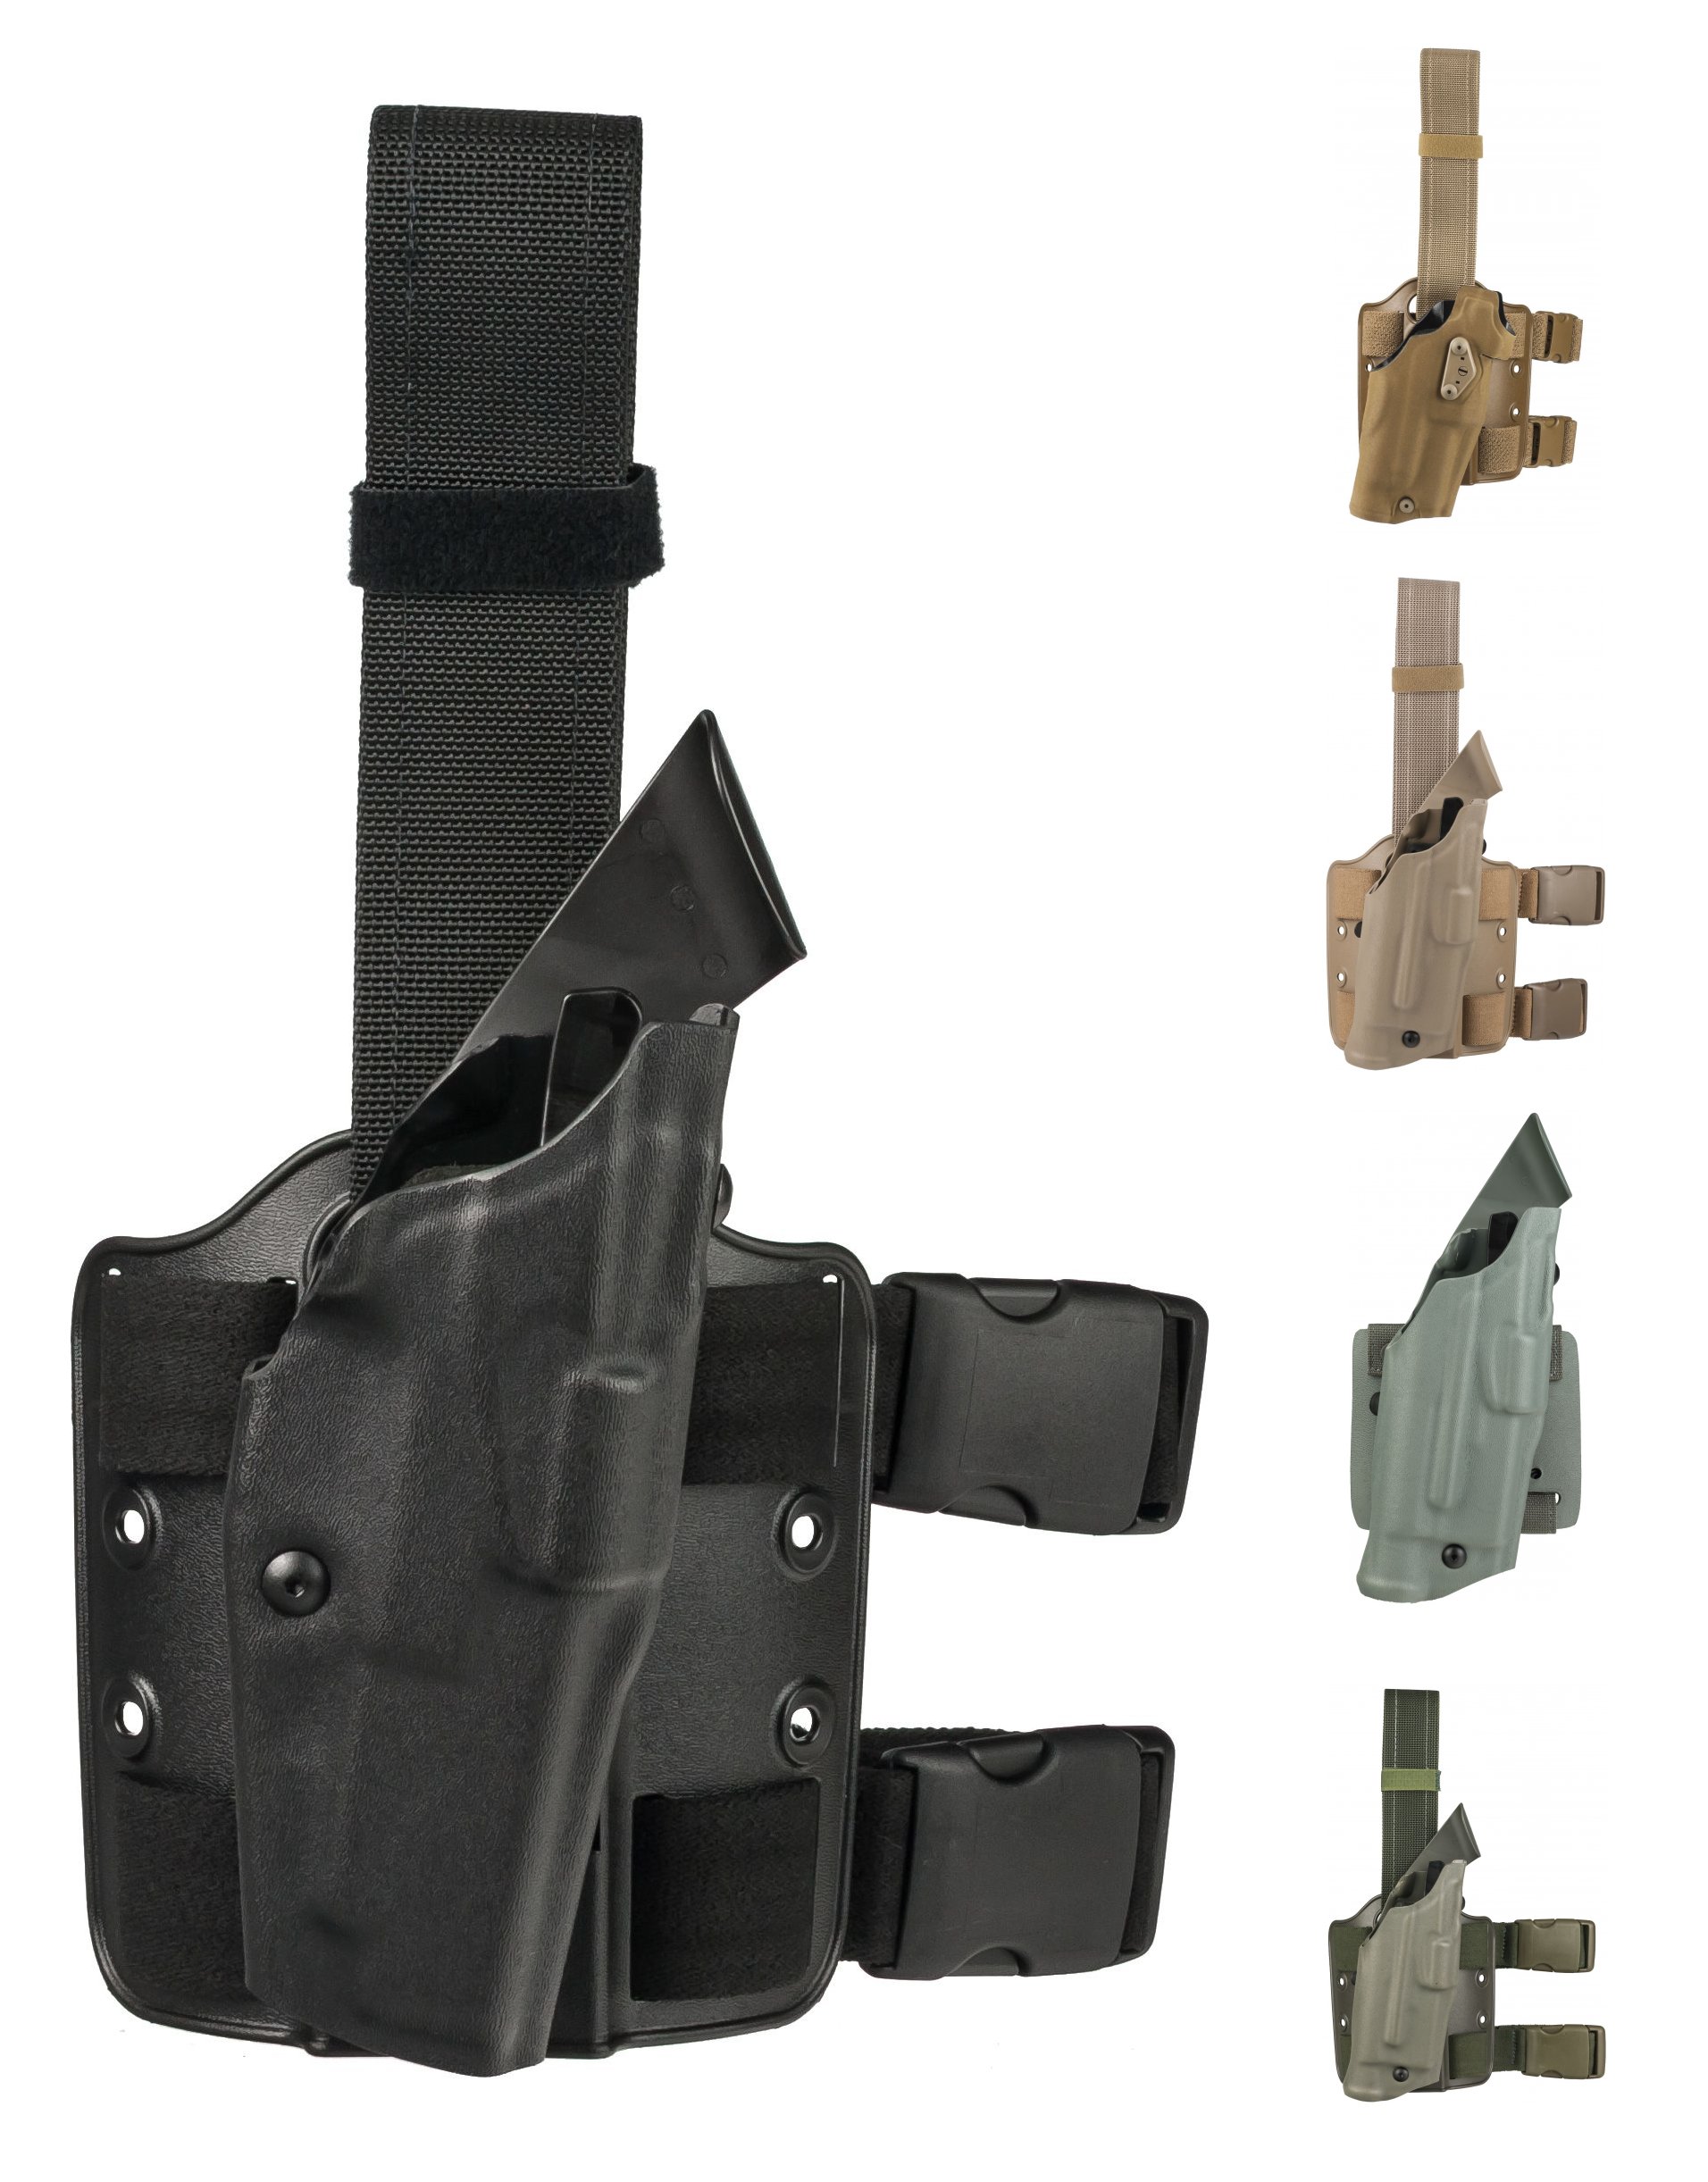 https://op1.0ps.us/original/opplanet-safariland-model-6354-als-drop-leg-glock-holster-mcimage-spids-94567-94732-96042-94566-94756-vids